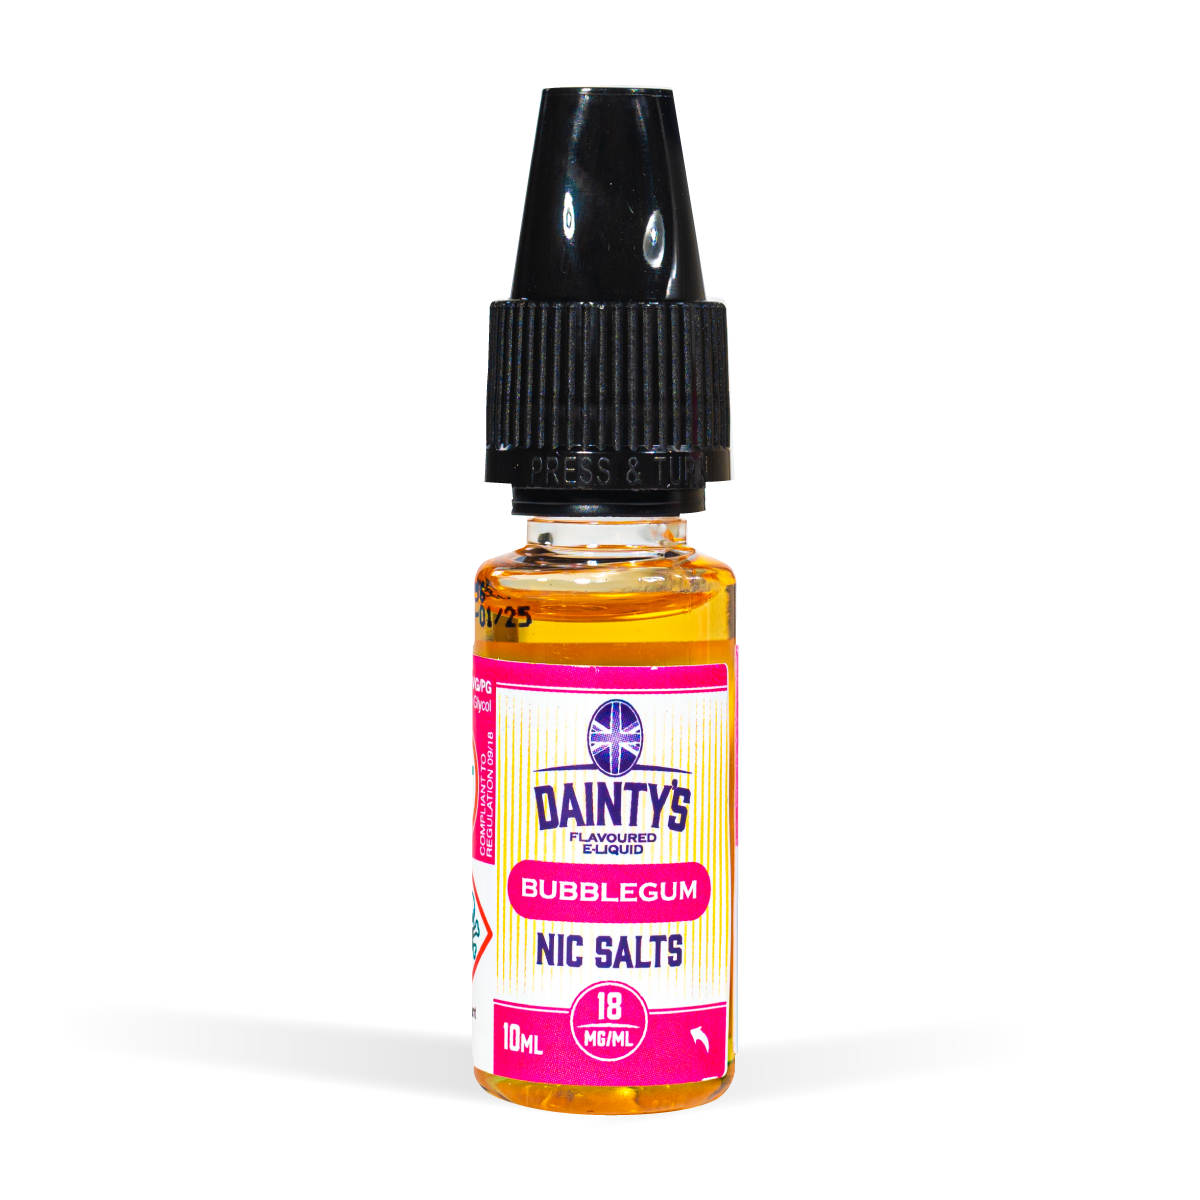 Salt Nic Bubblegum Menthol, Dainty's 10ml bottle on white background